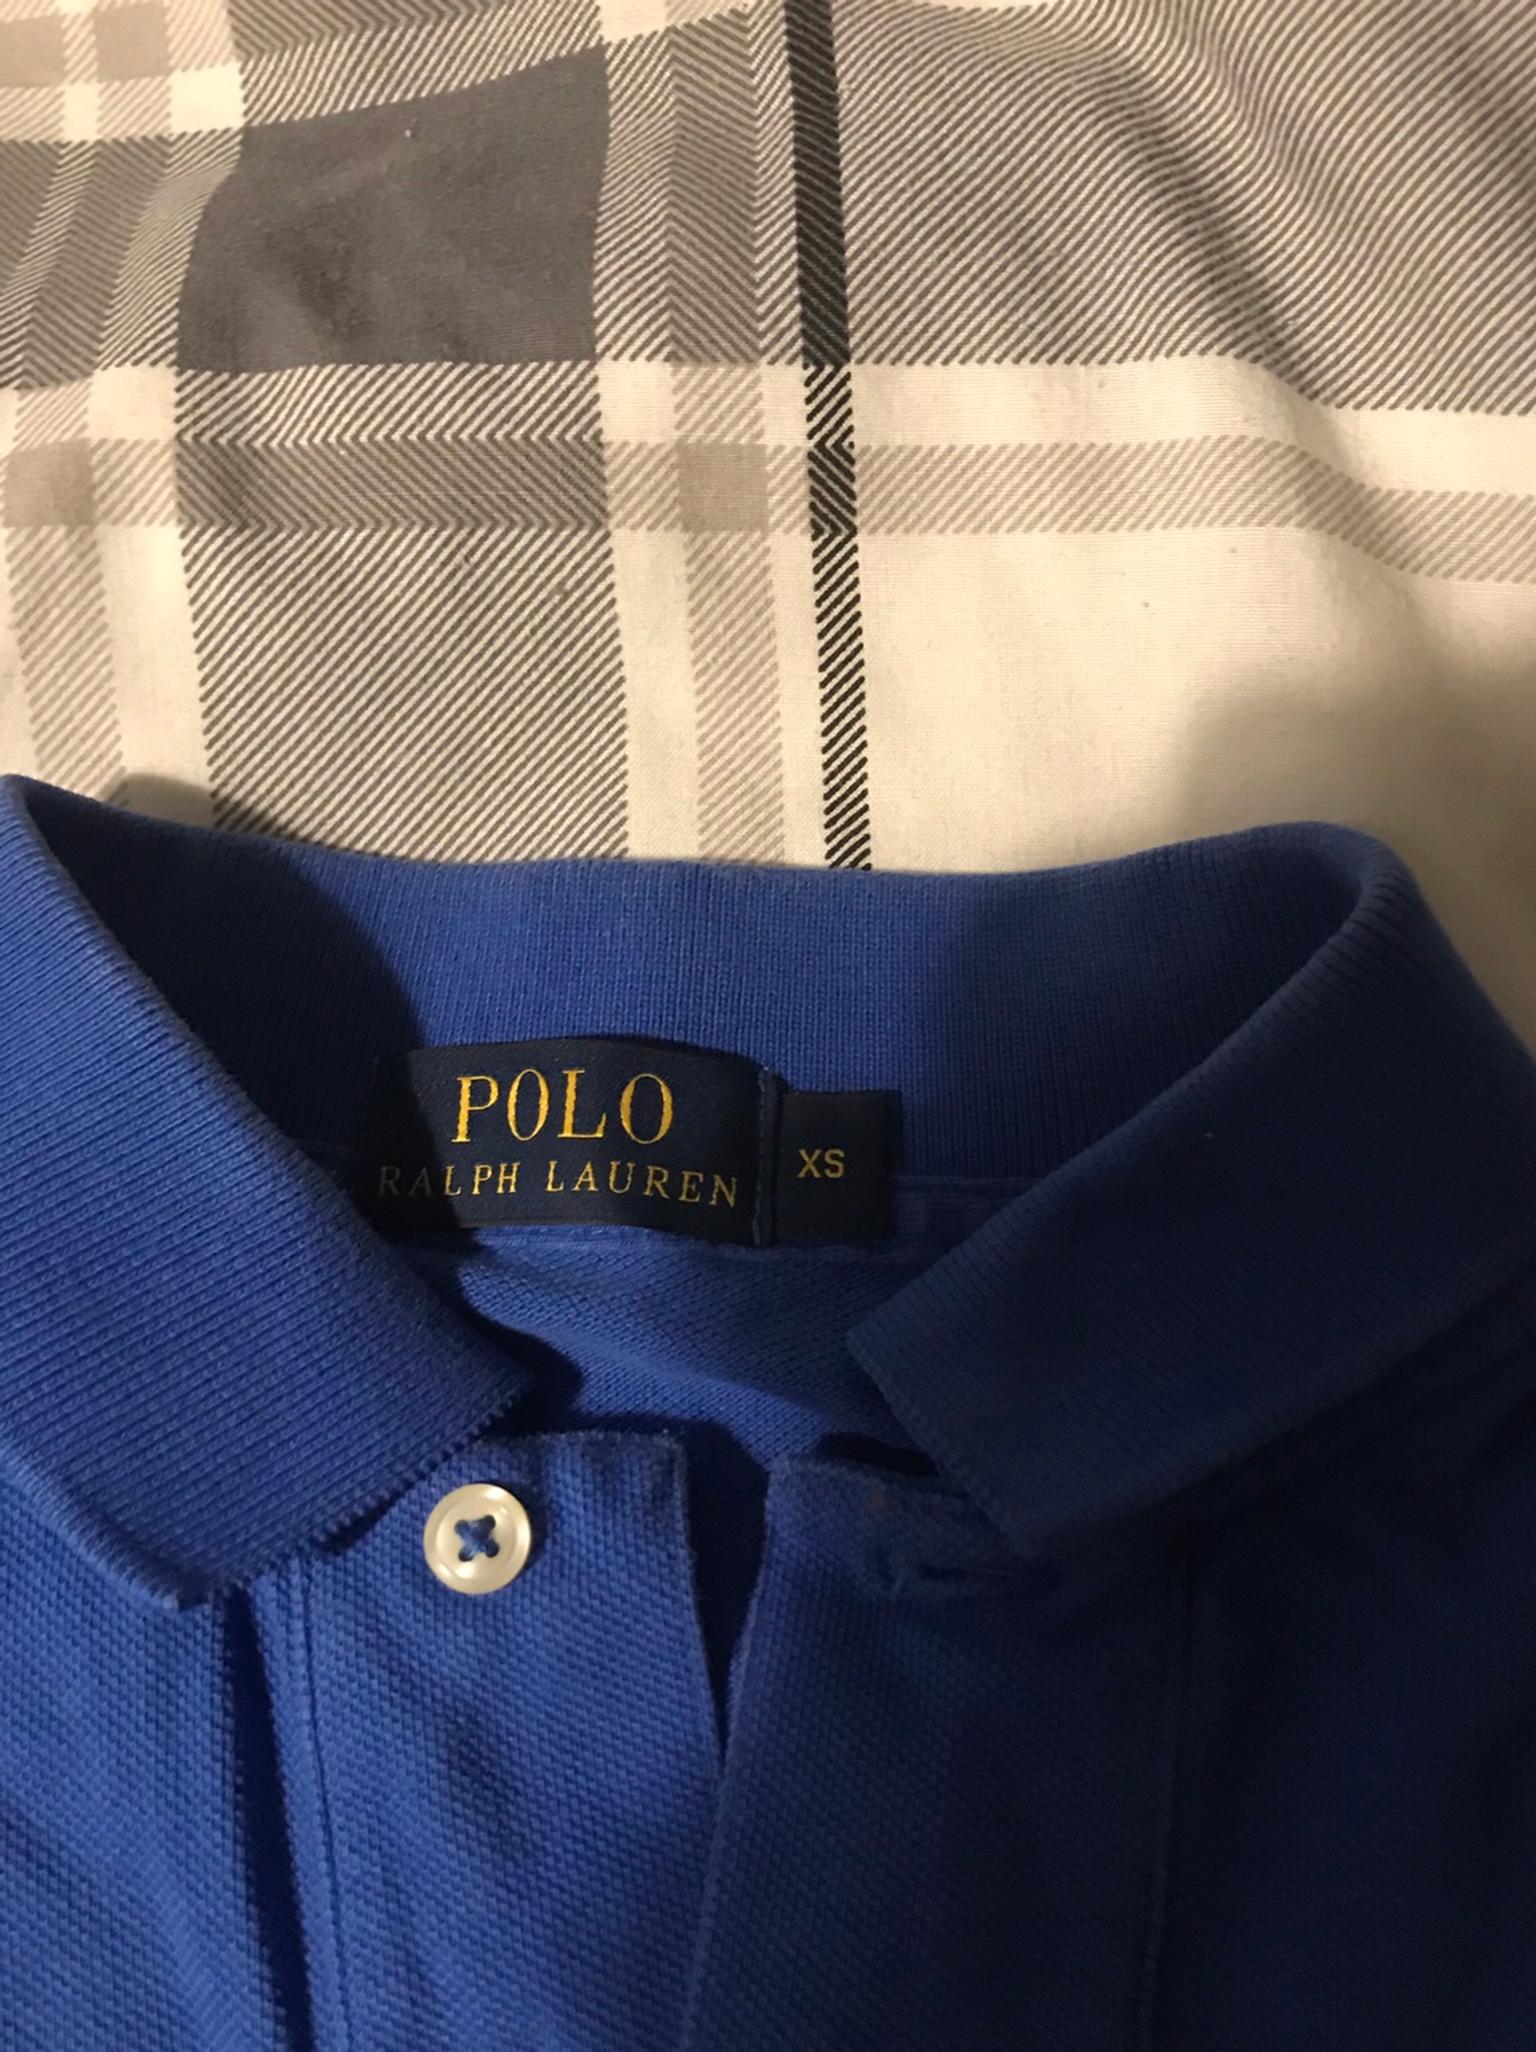 fake polo ralph lauren shirts